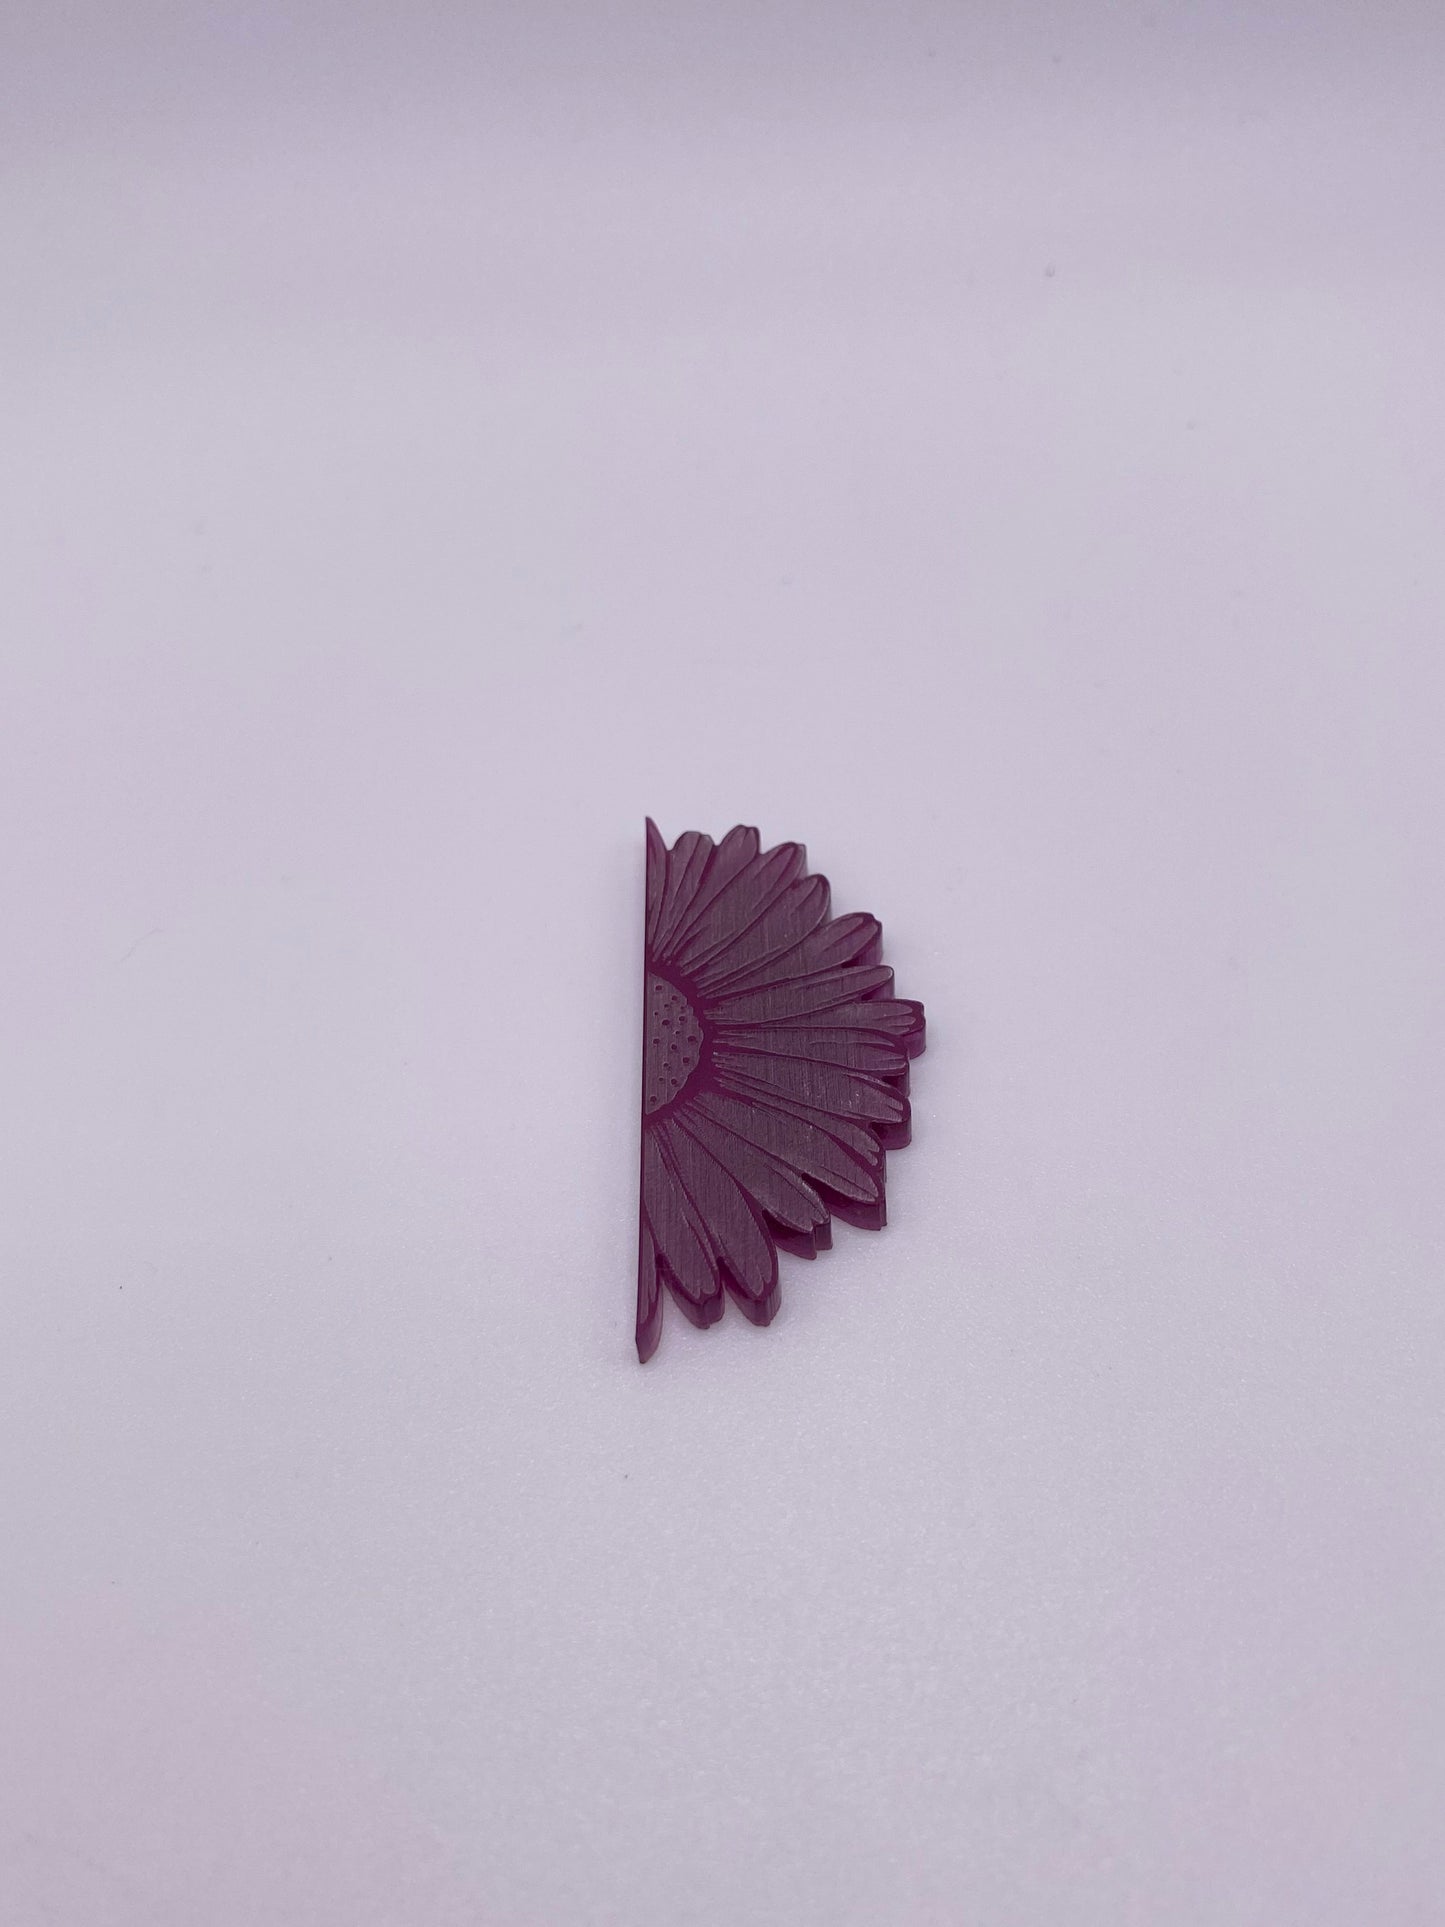 Purple half sunflower - Creative Designs By Kari